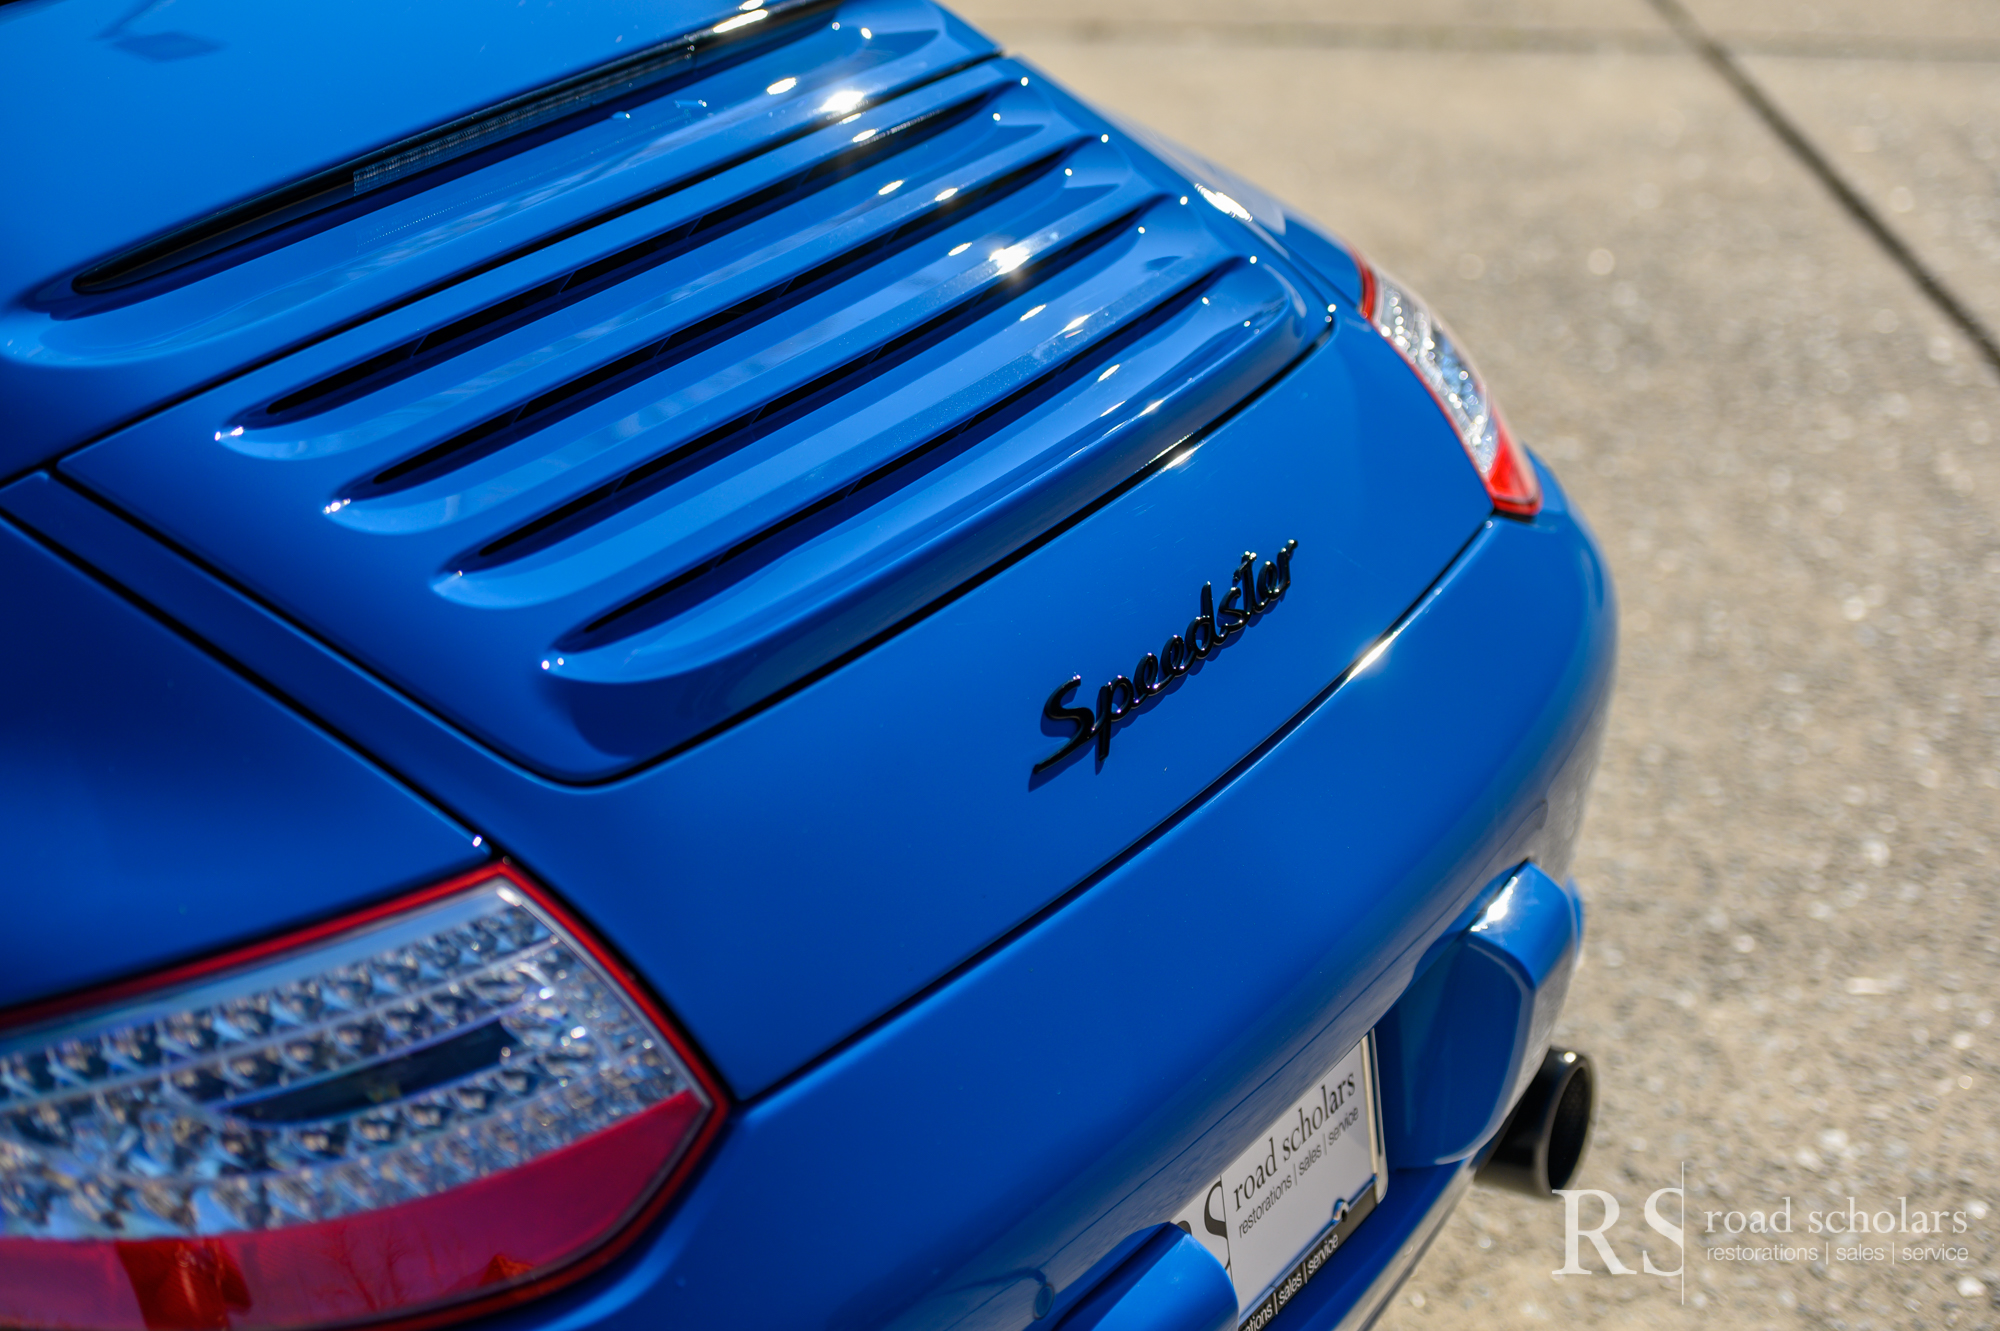 2011 Porsche 911 Speedster - For Sale by Road Scholars